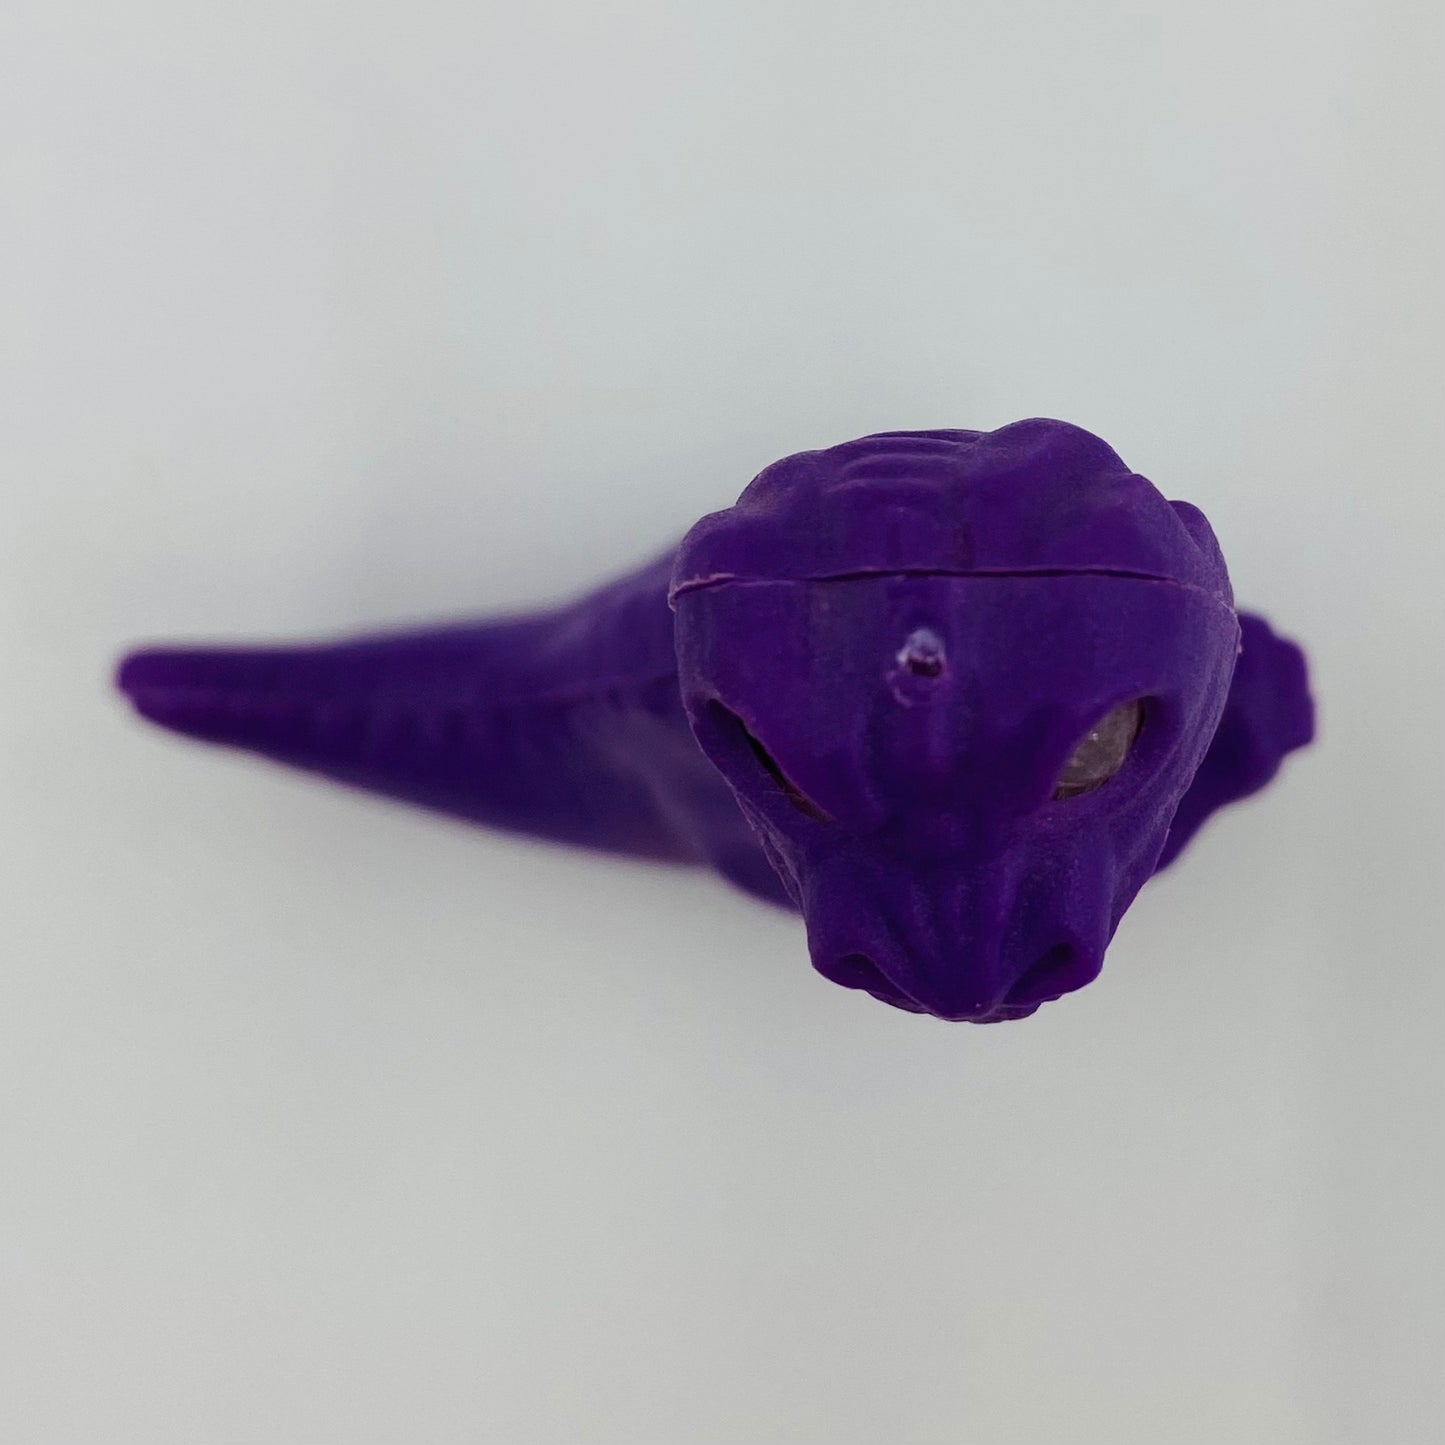 Post Fruity Pebbles The Flintstones Skele-Saurus purple T-Rex (1996) loose